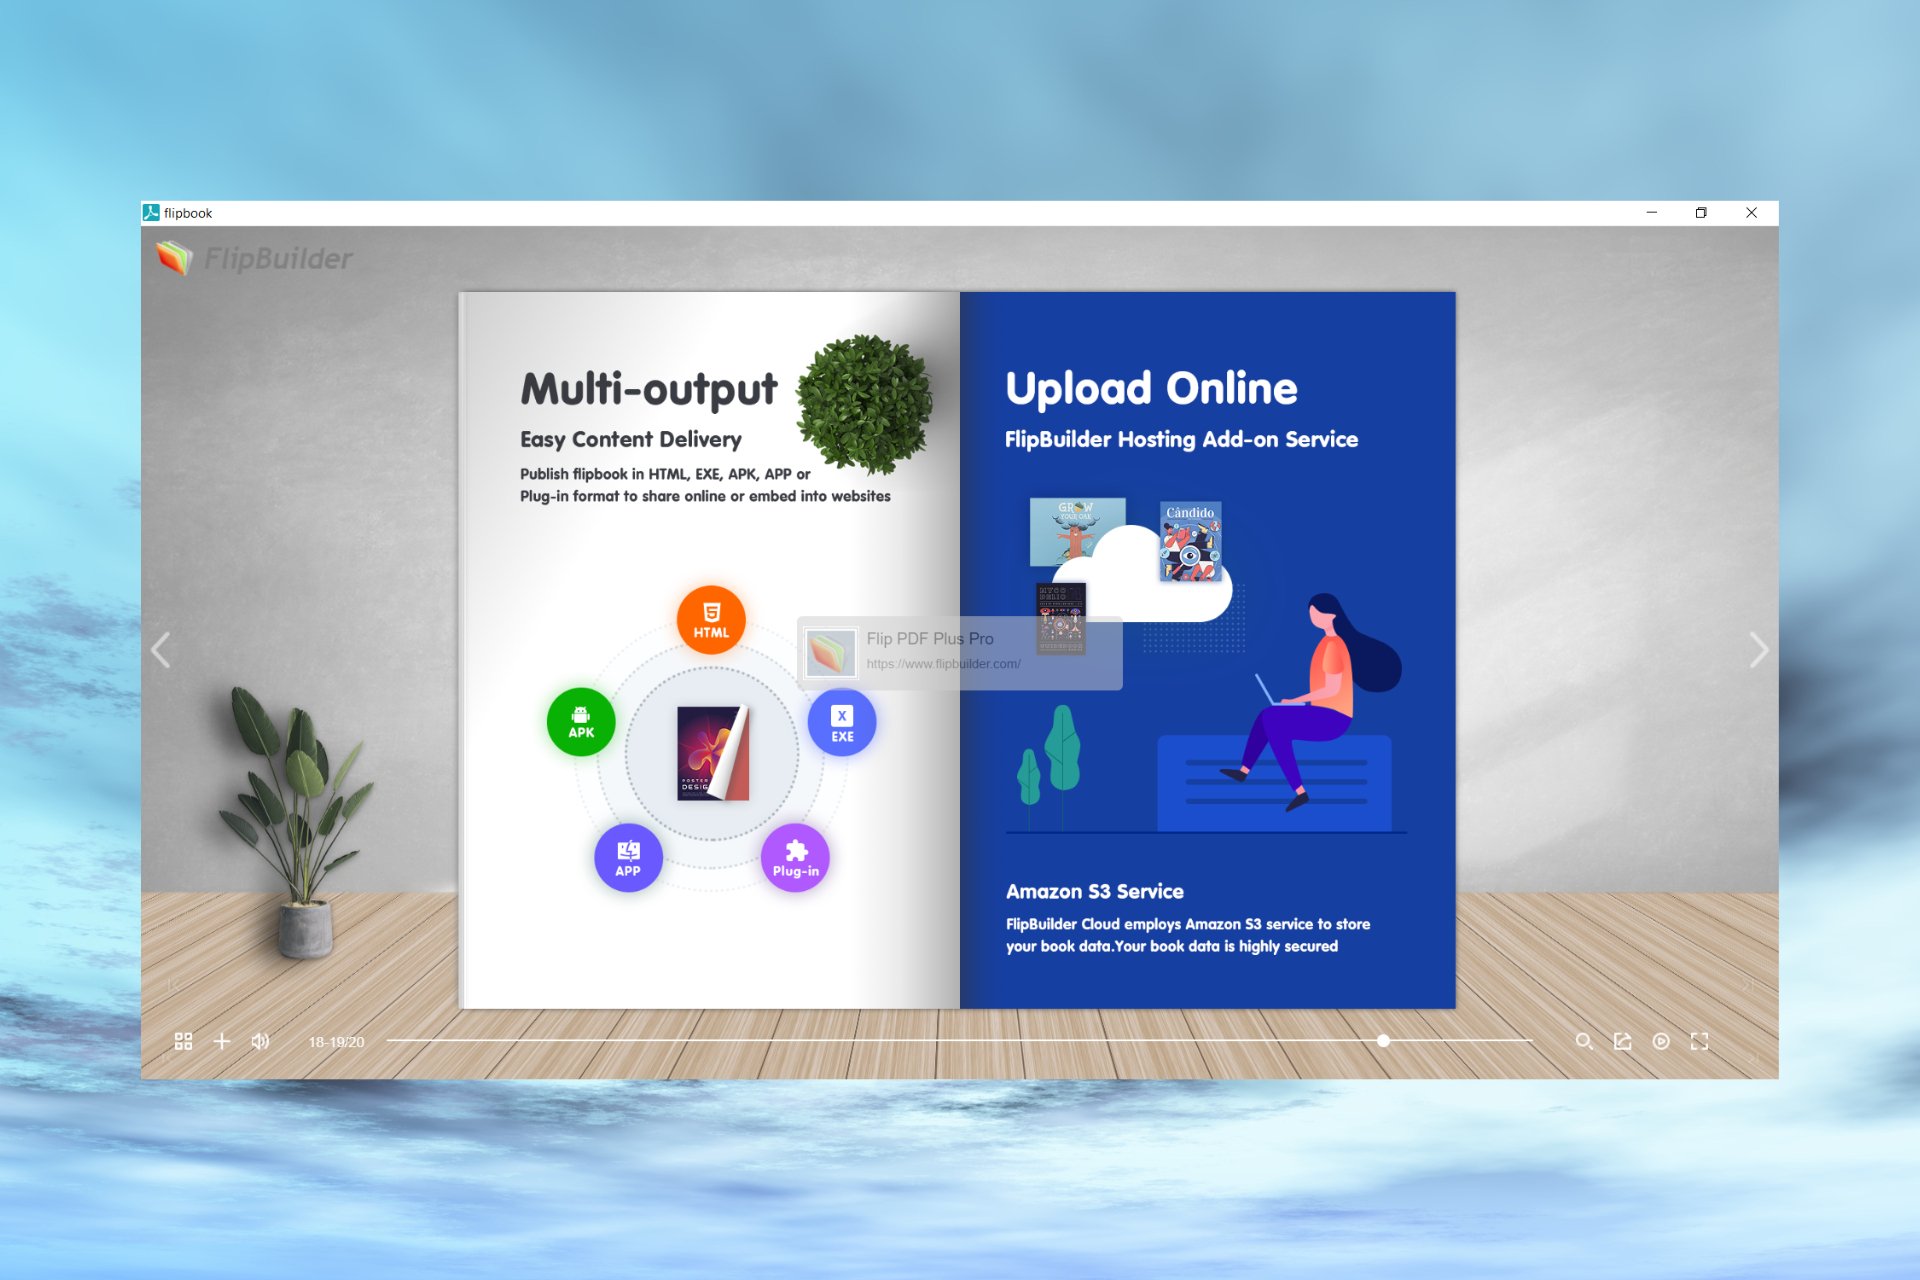 Create books with Flip PDF Plus Pro